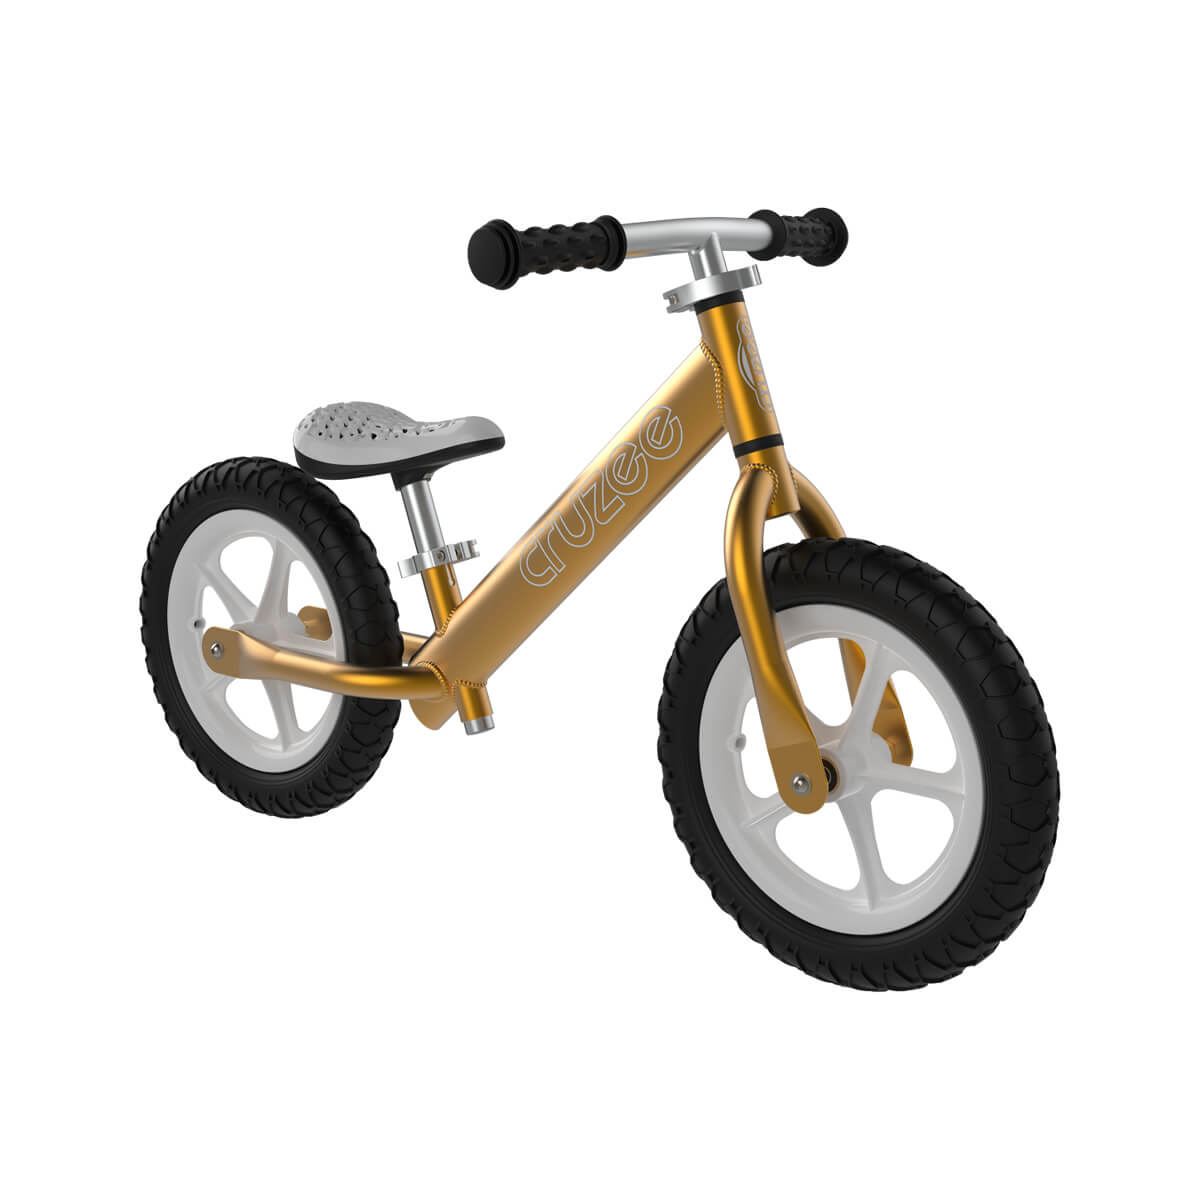 Cruzee Balance Bike - Gold